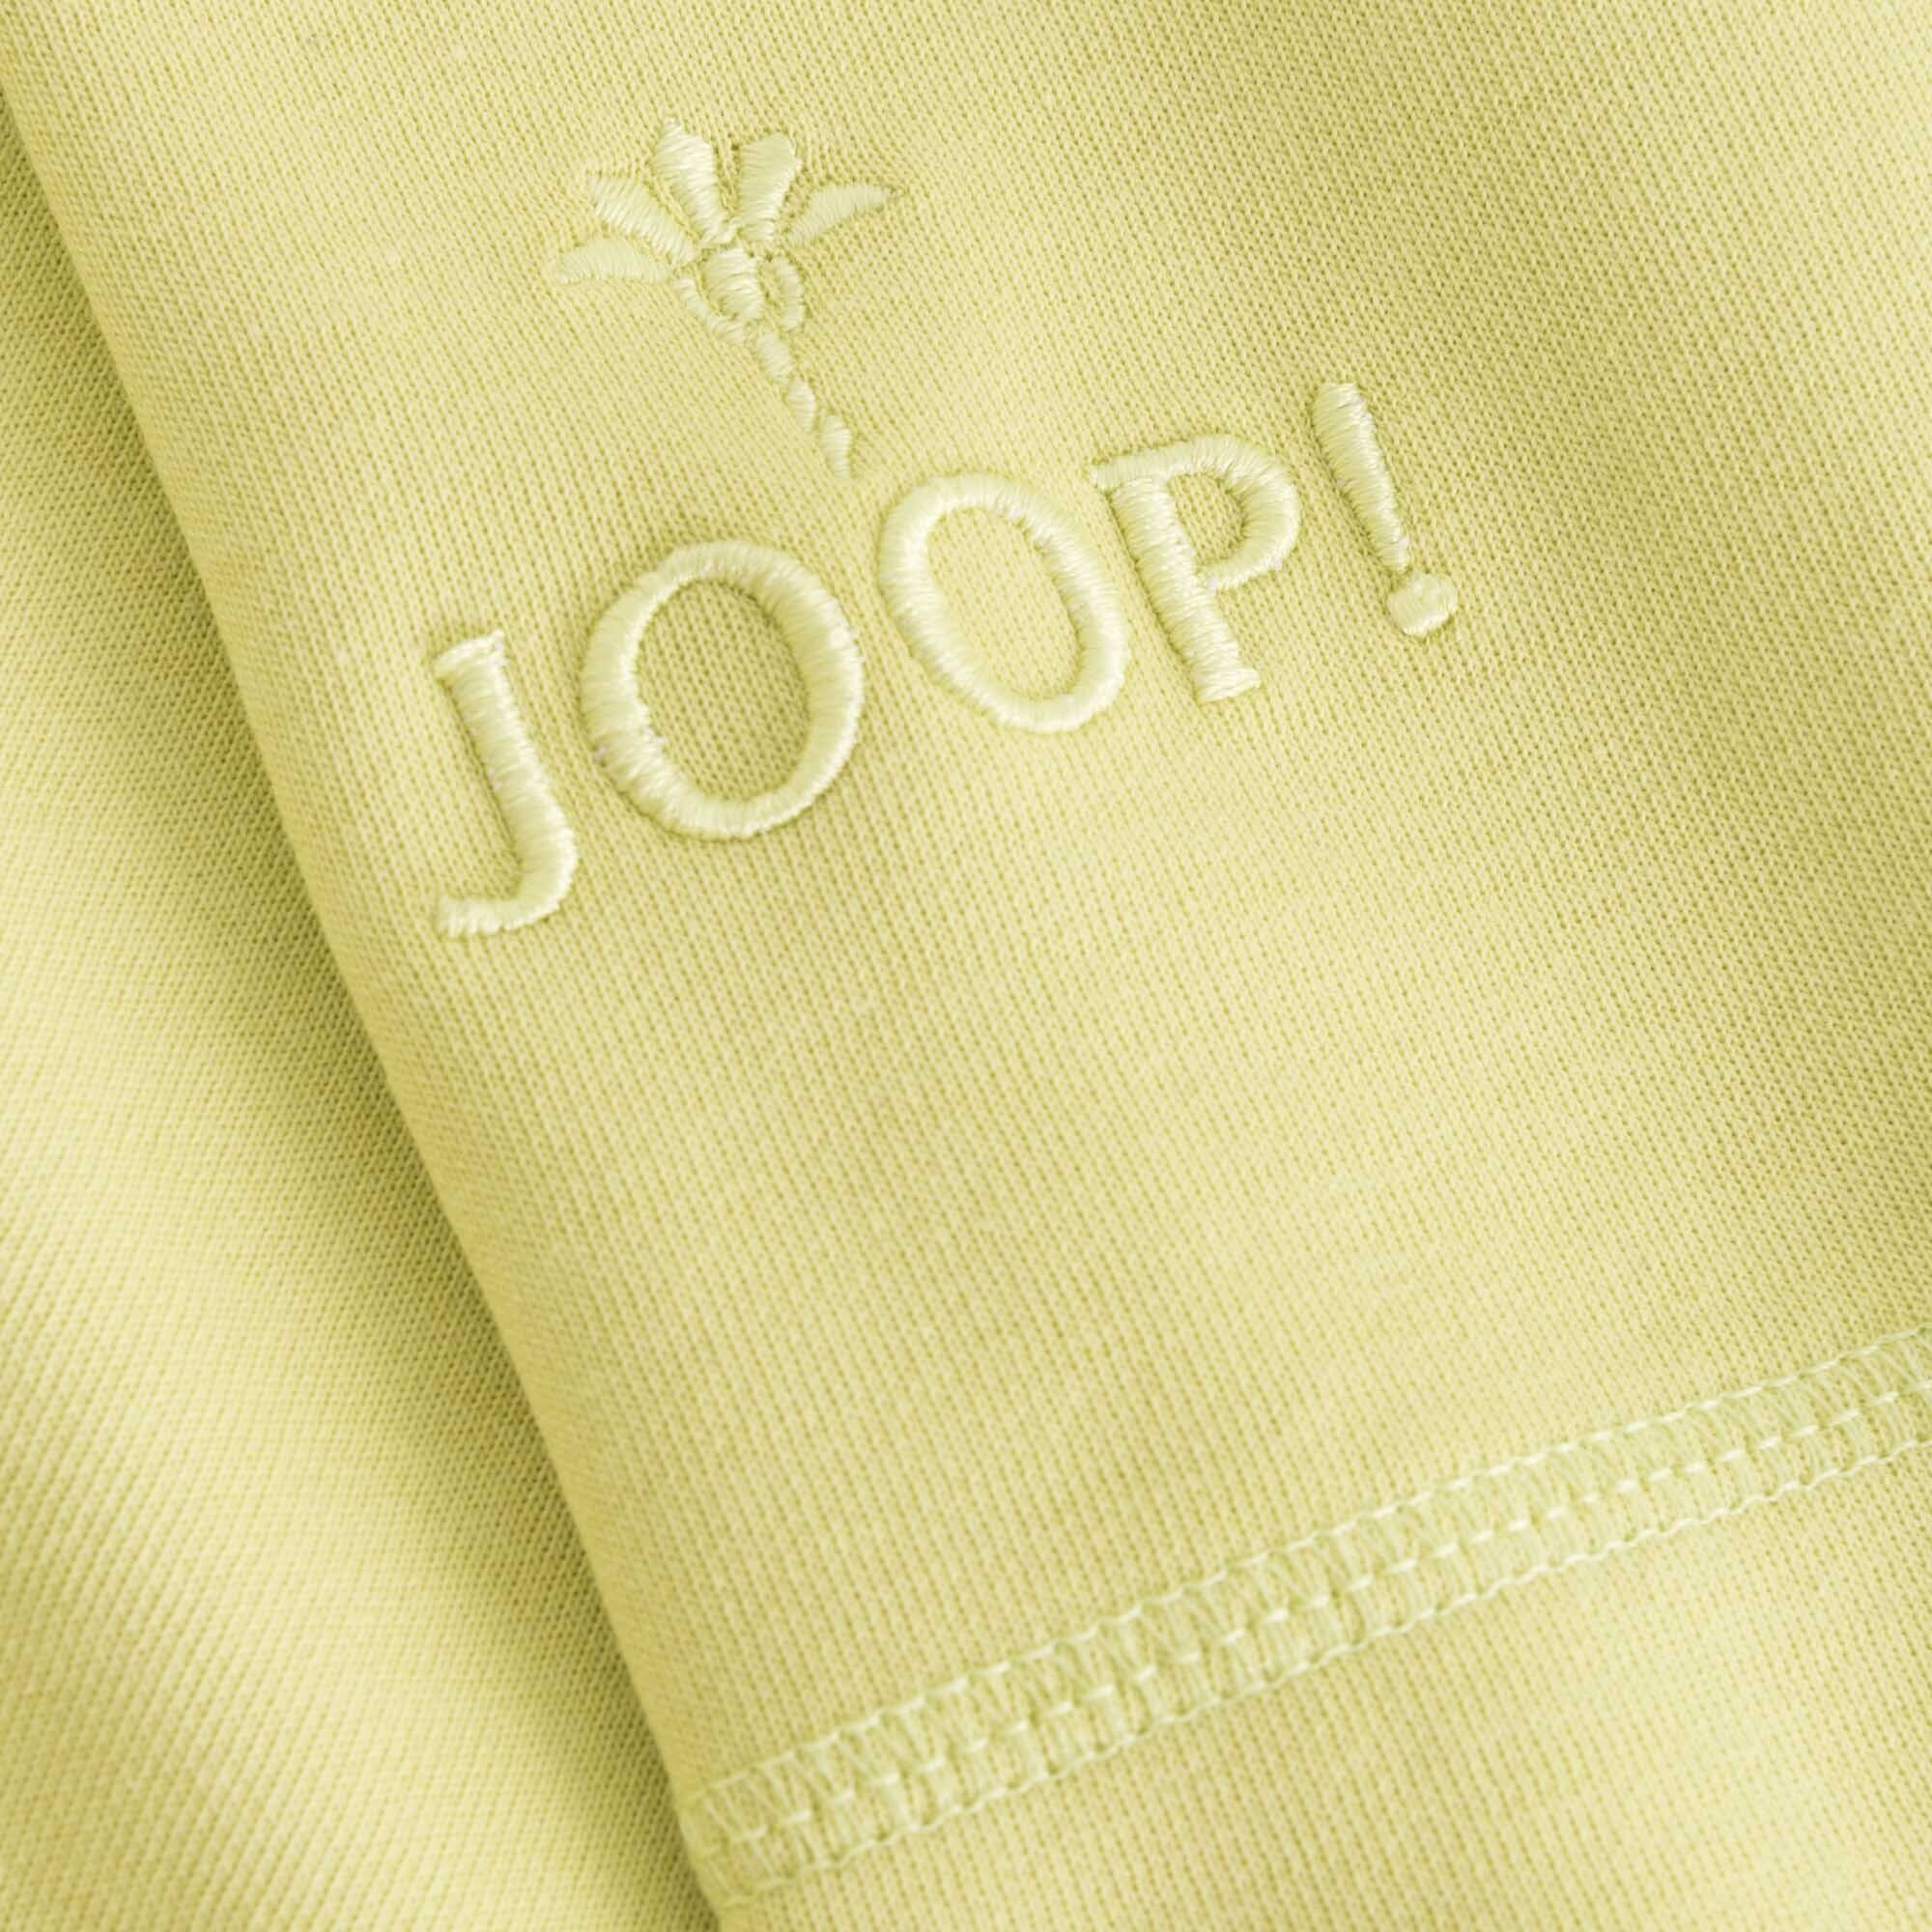 Loungewear Grün (Bright Damen Green) Hoodie Joop! Sweater, Sweater Sweatshirt, -